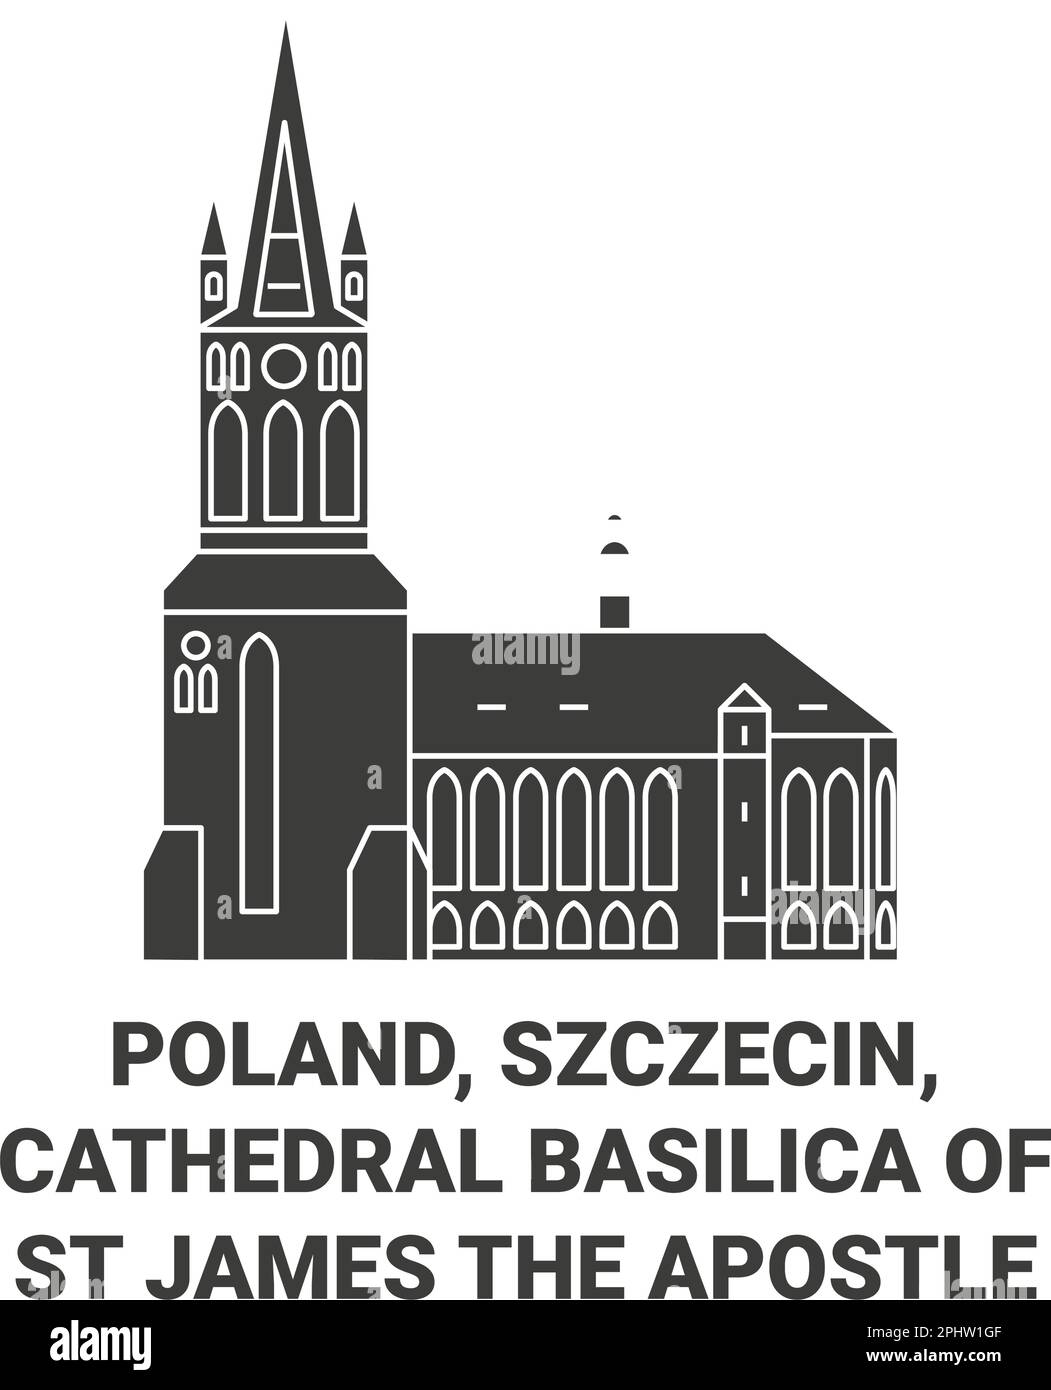 Poland, Szczecin, Cathedral Basilica Of St James The Apostle travel landmark vector illustration Stock Vector